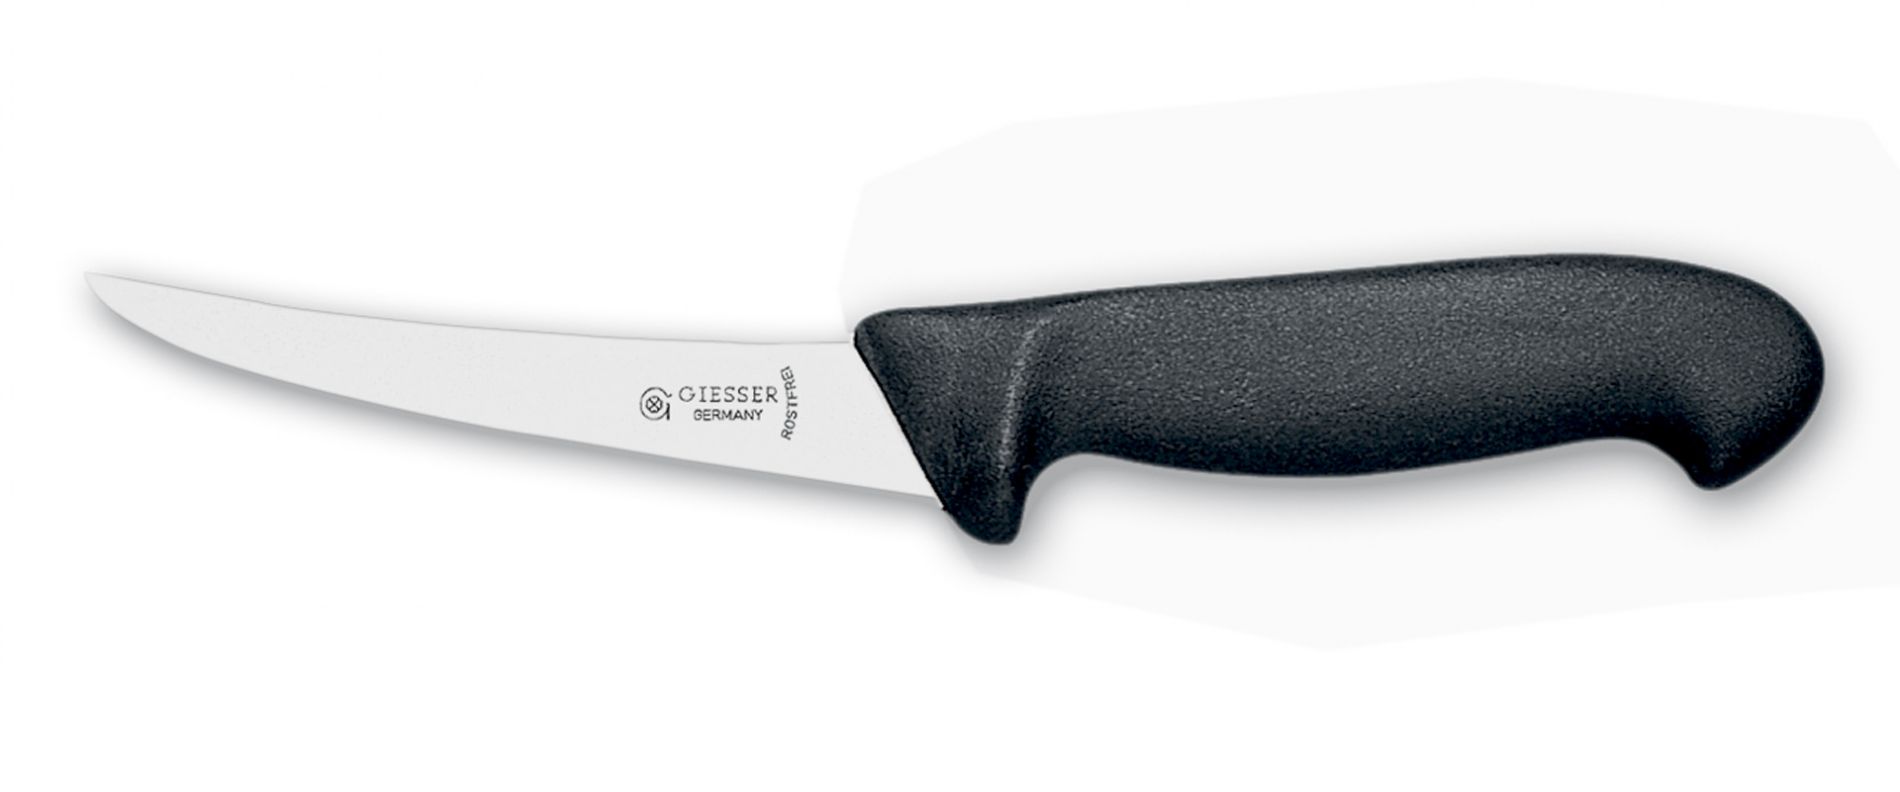 Cuchillo para deshuesar GIESSER,  hoja 10cm curva, mediana, mango clásico, negro